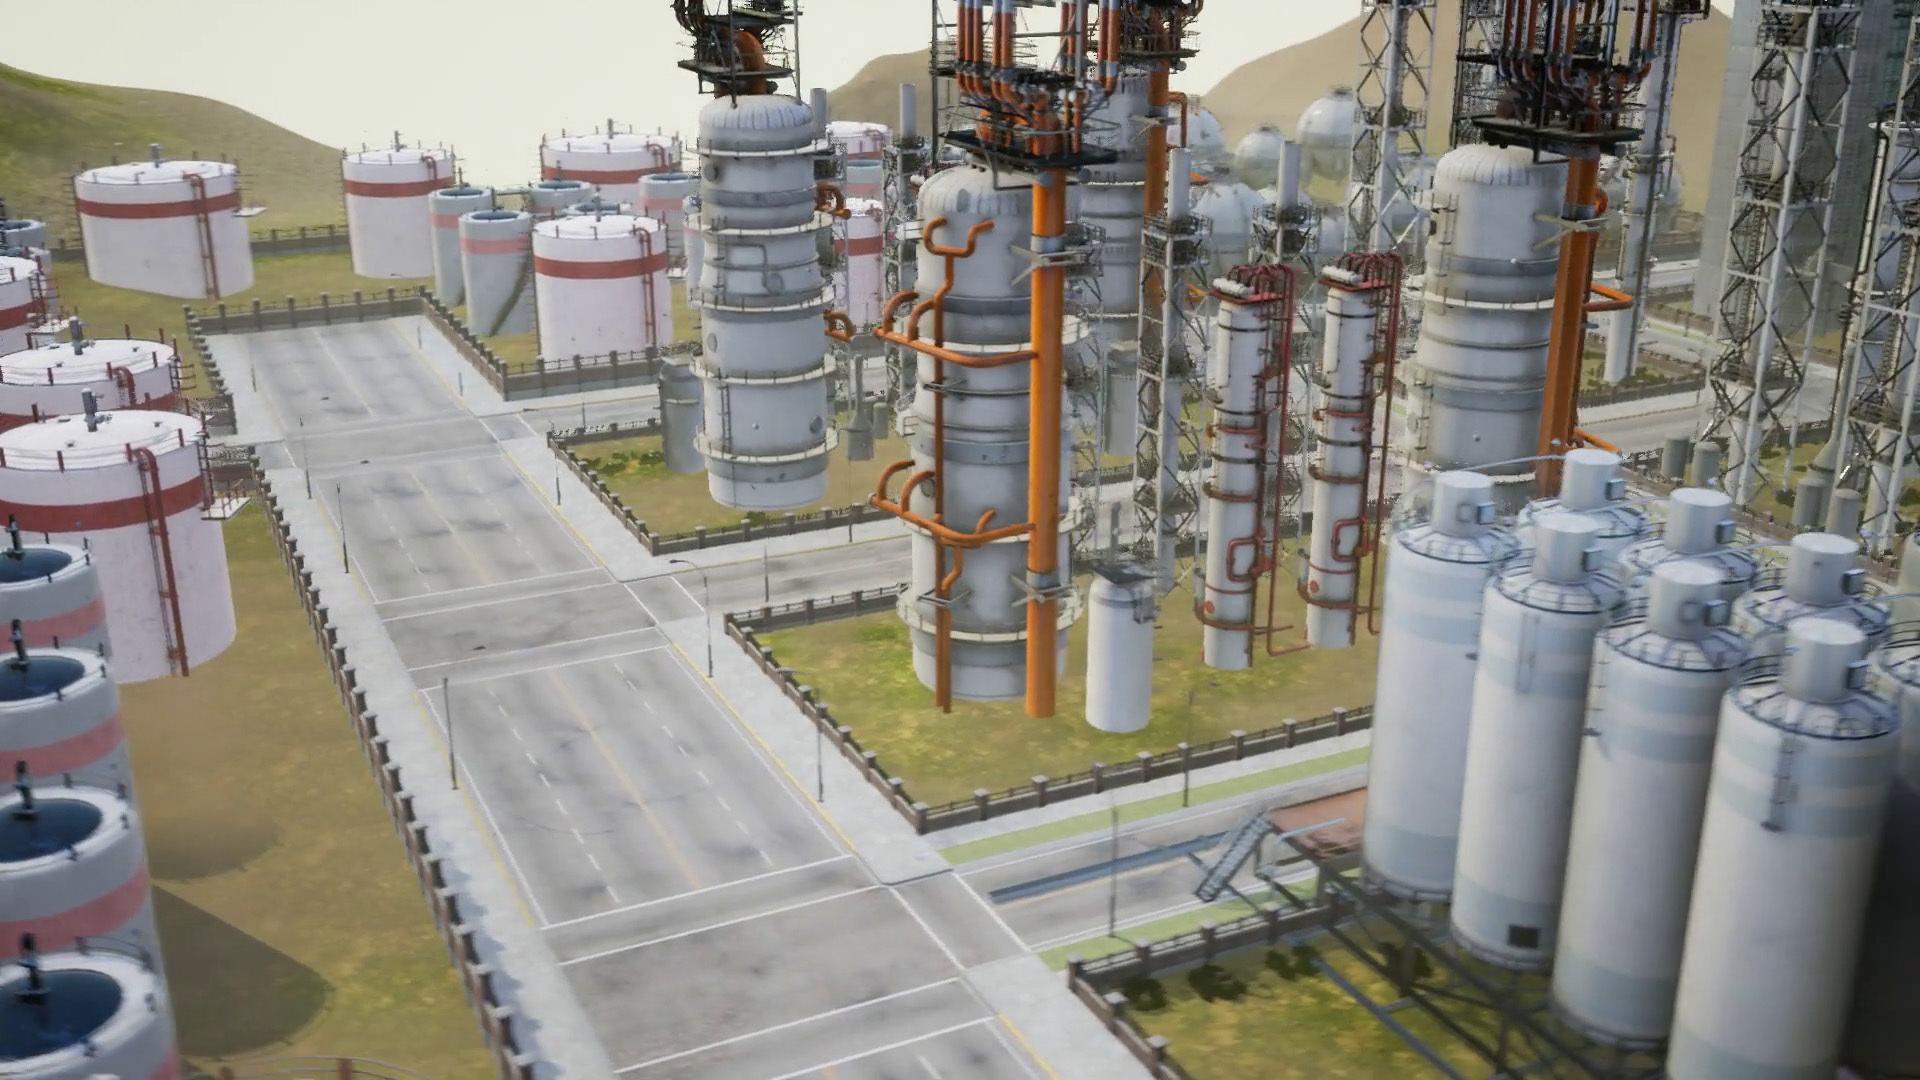 A virtual tour of an oil refinery.